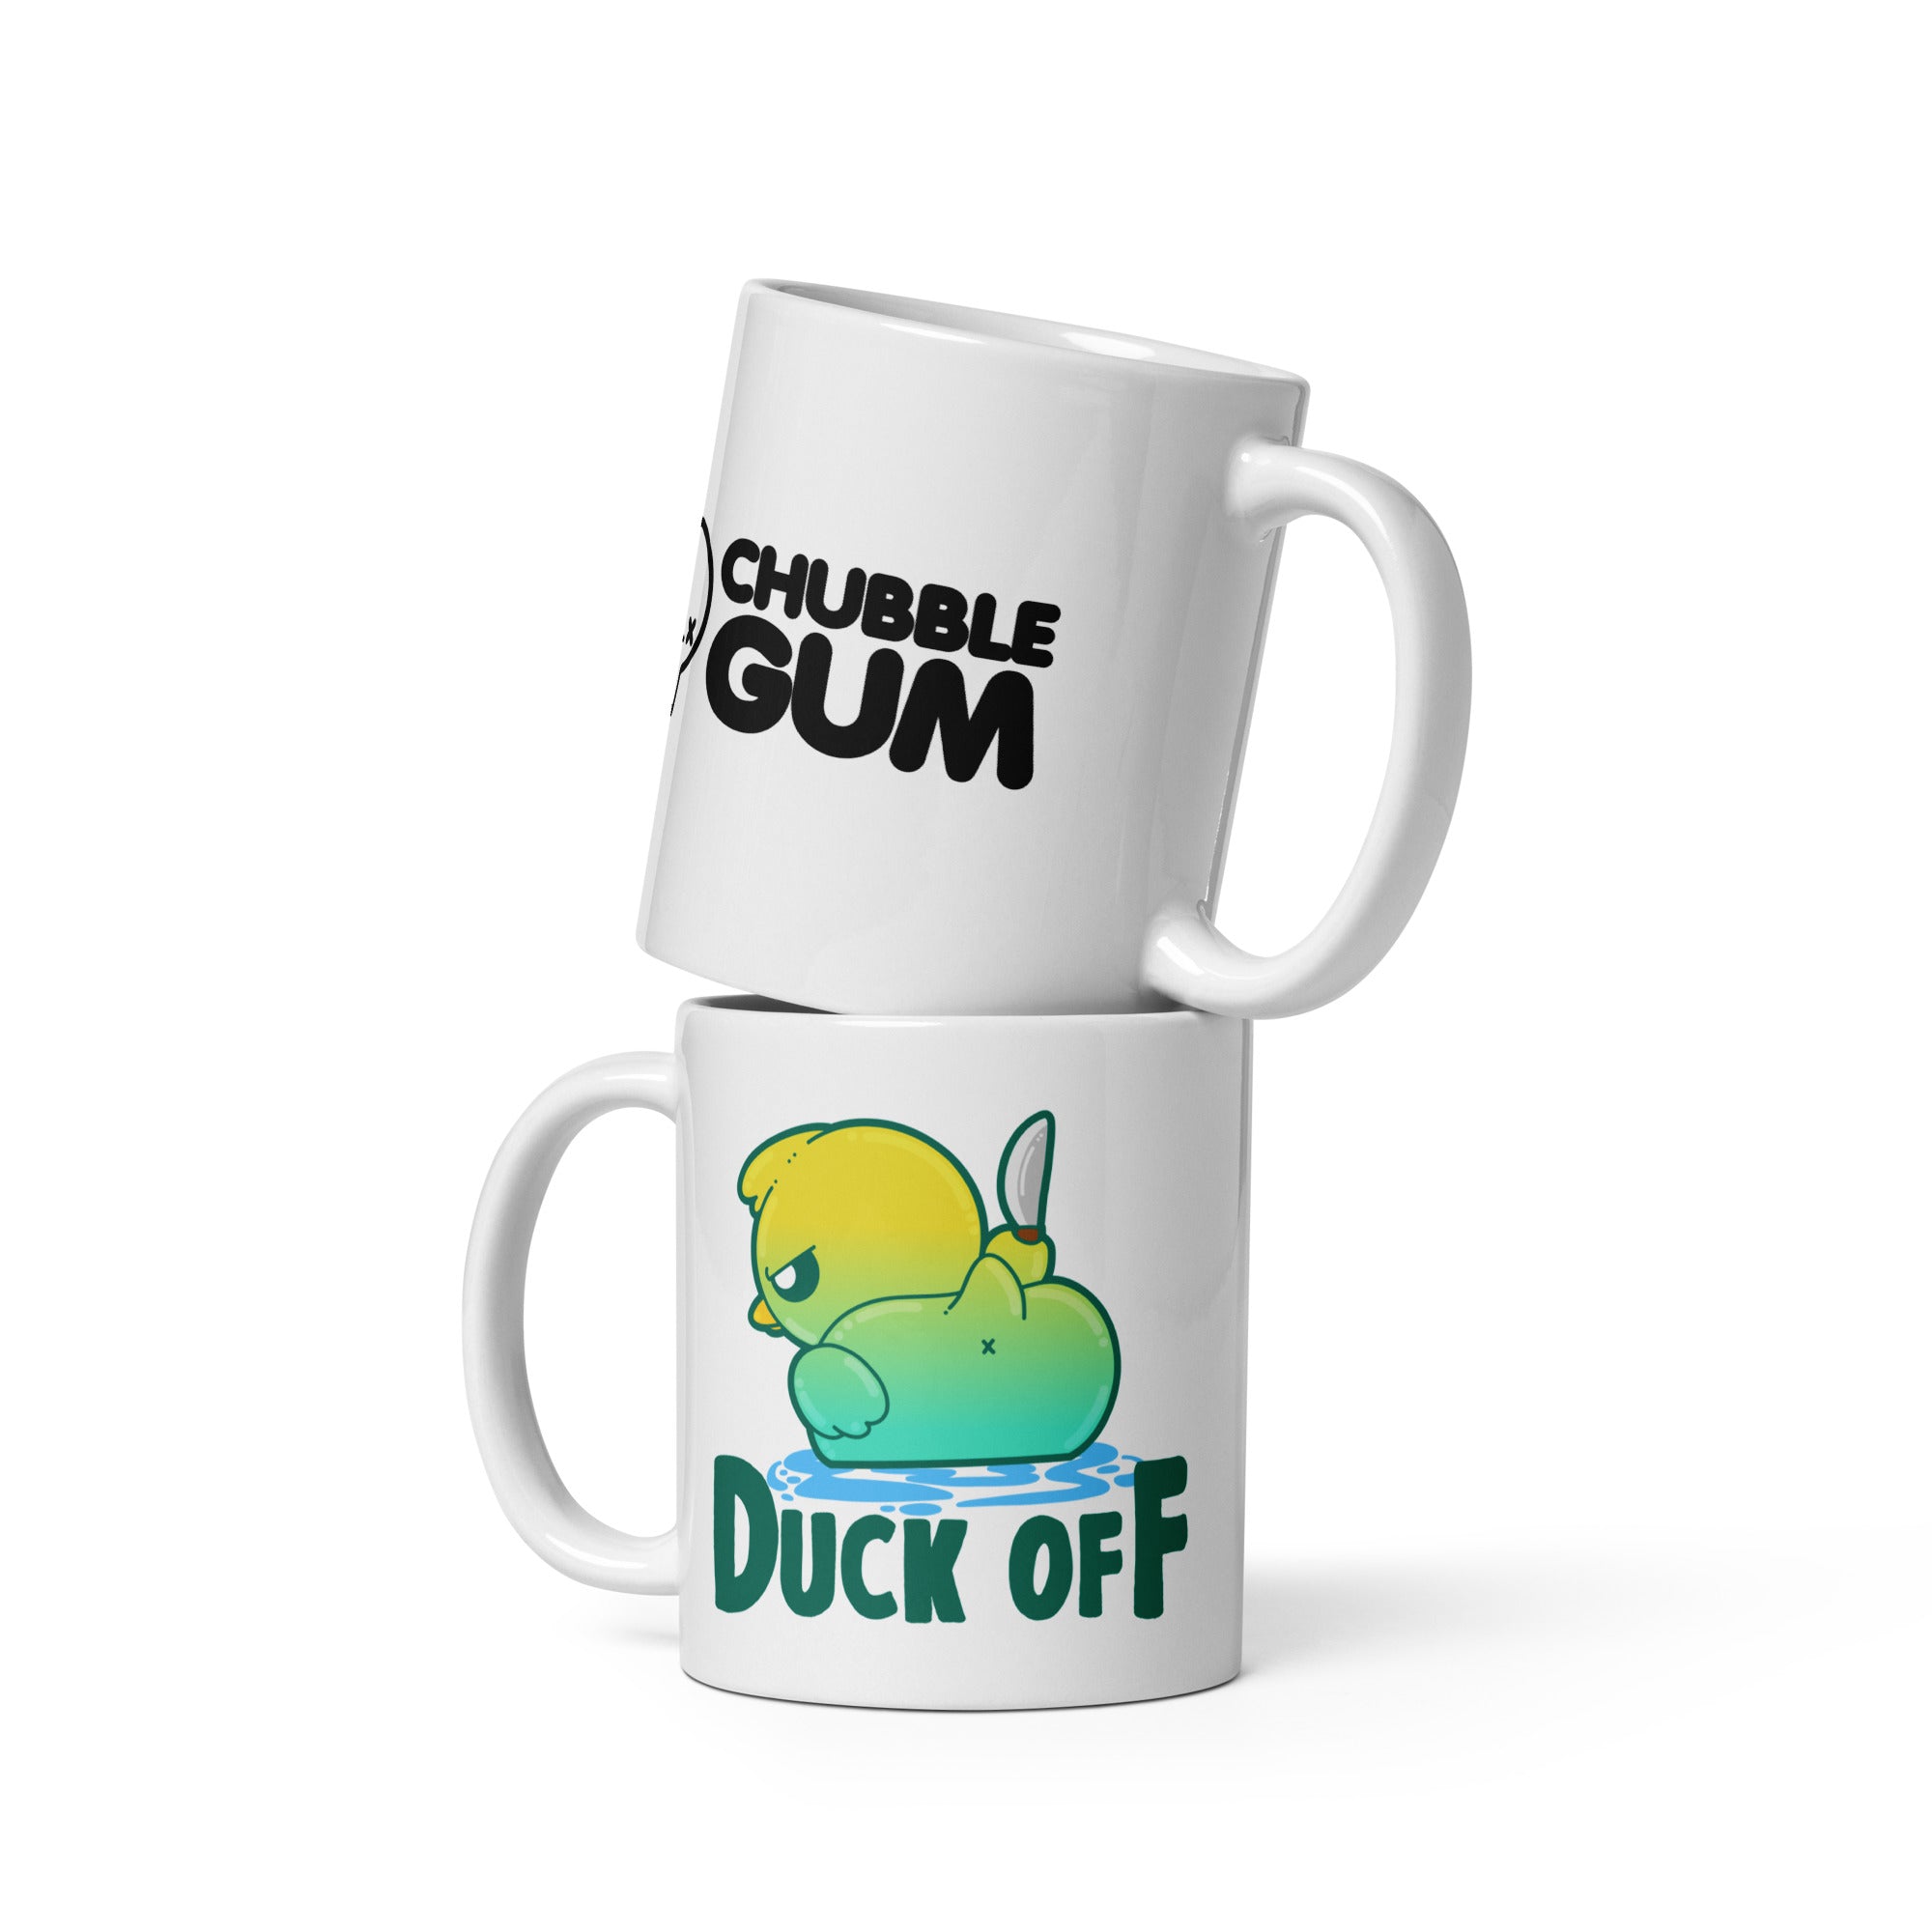 DUCK OFF - Coffee Mug - ChubbleGumLLC